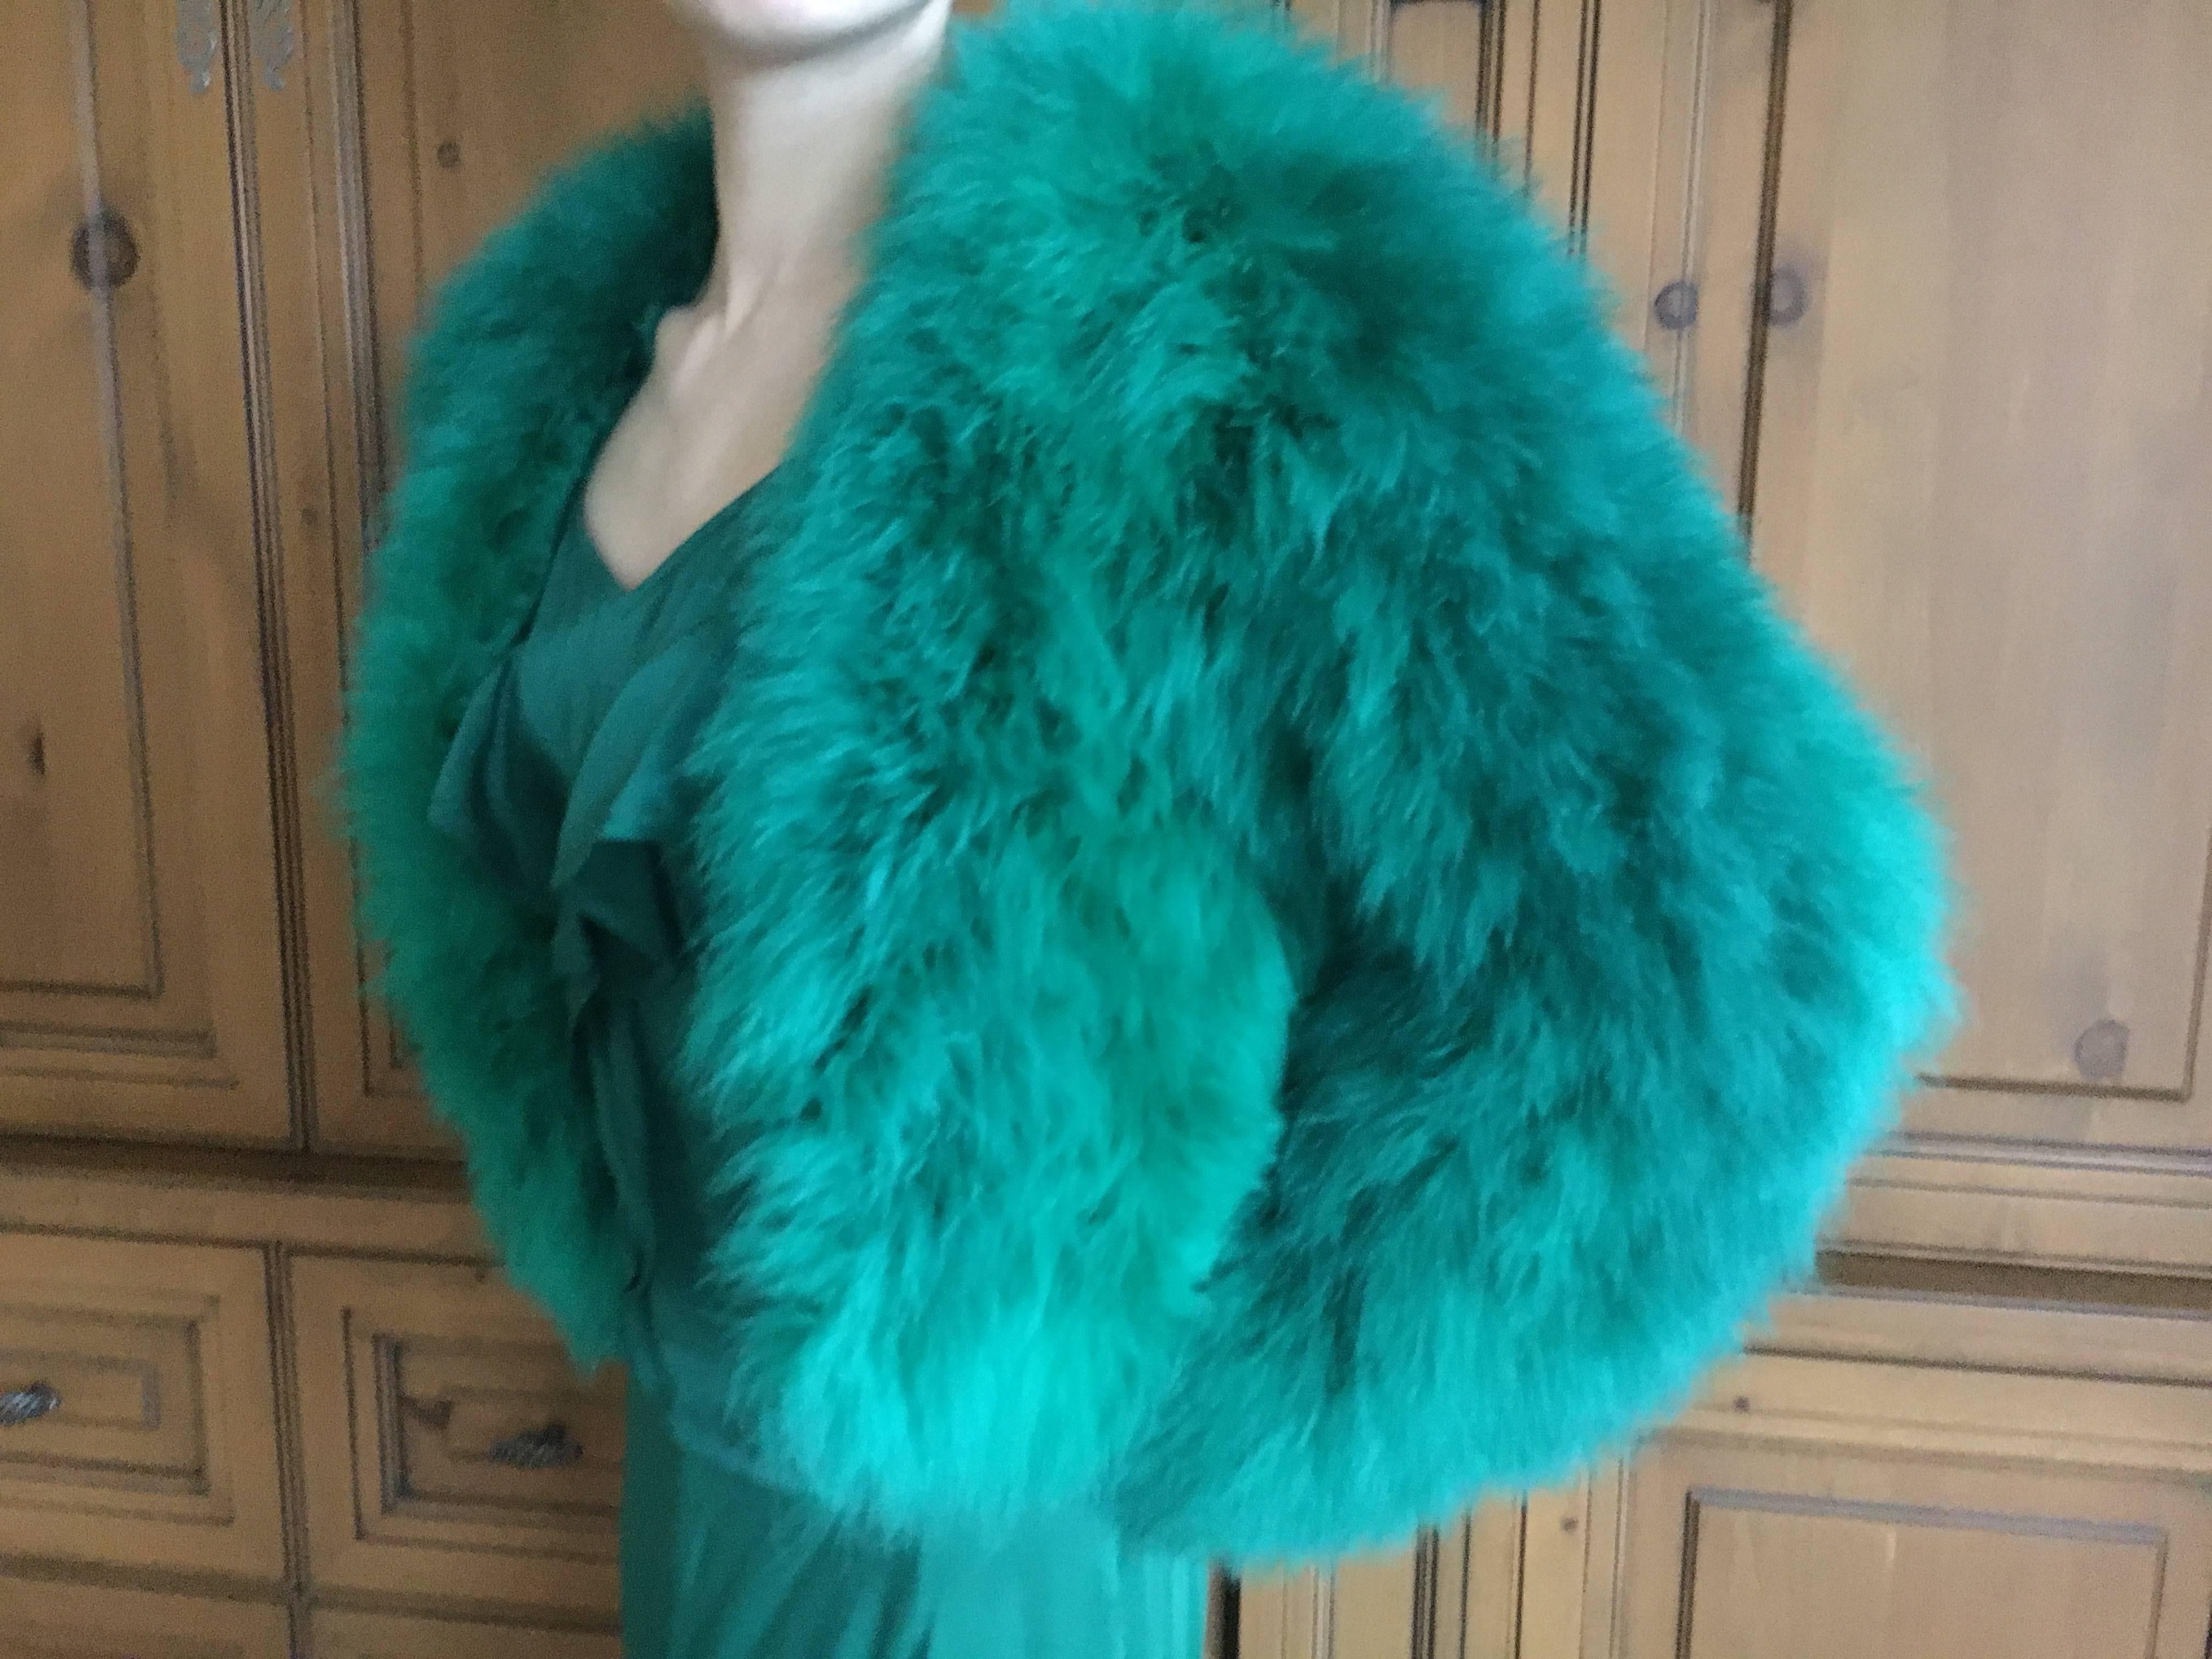  Saint Laurent by Hedi Slimane 2015 Green Turkey Feather Jacket For Sale 3